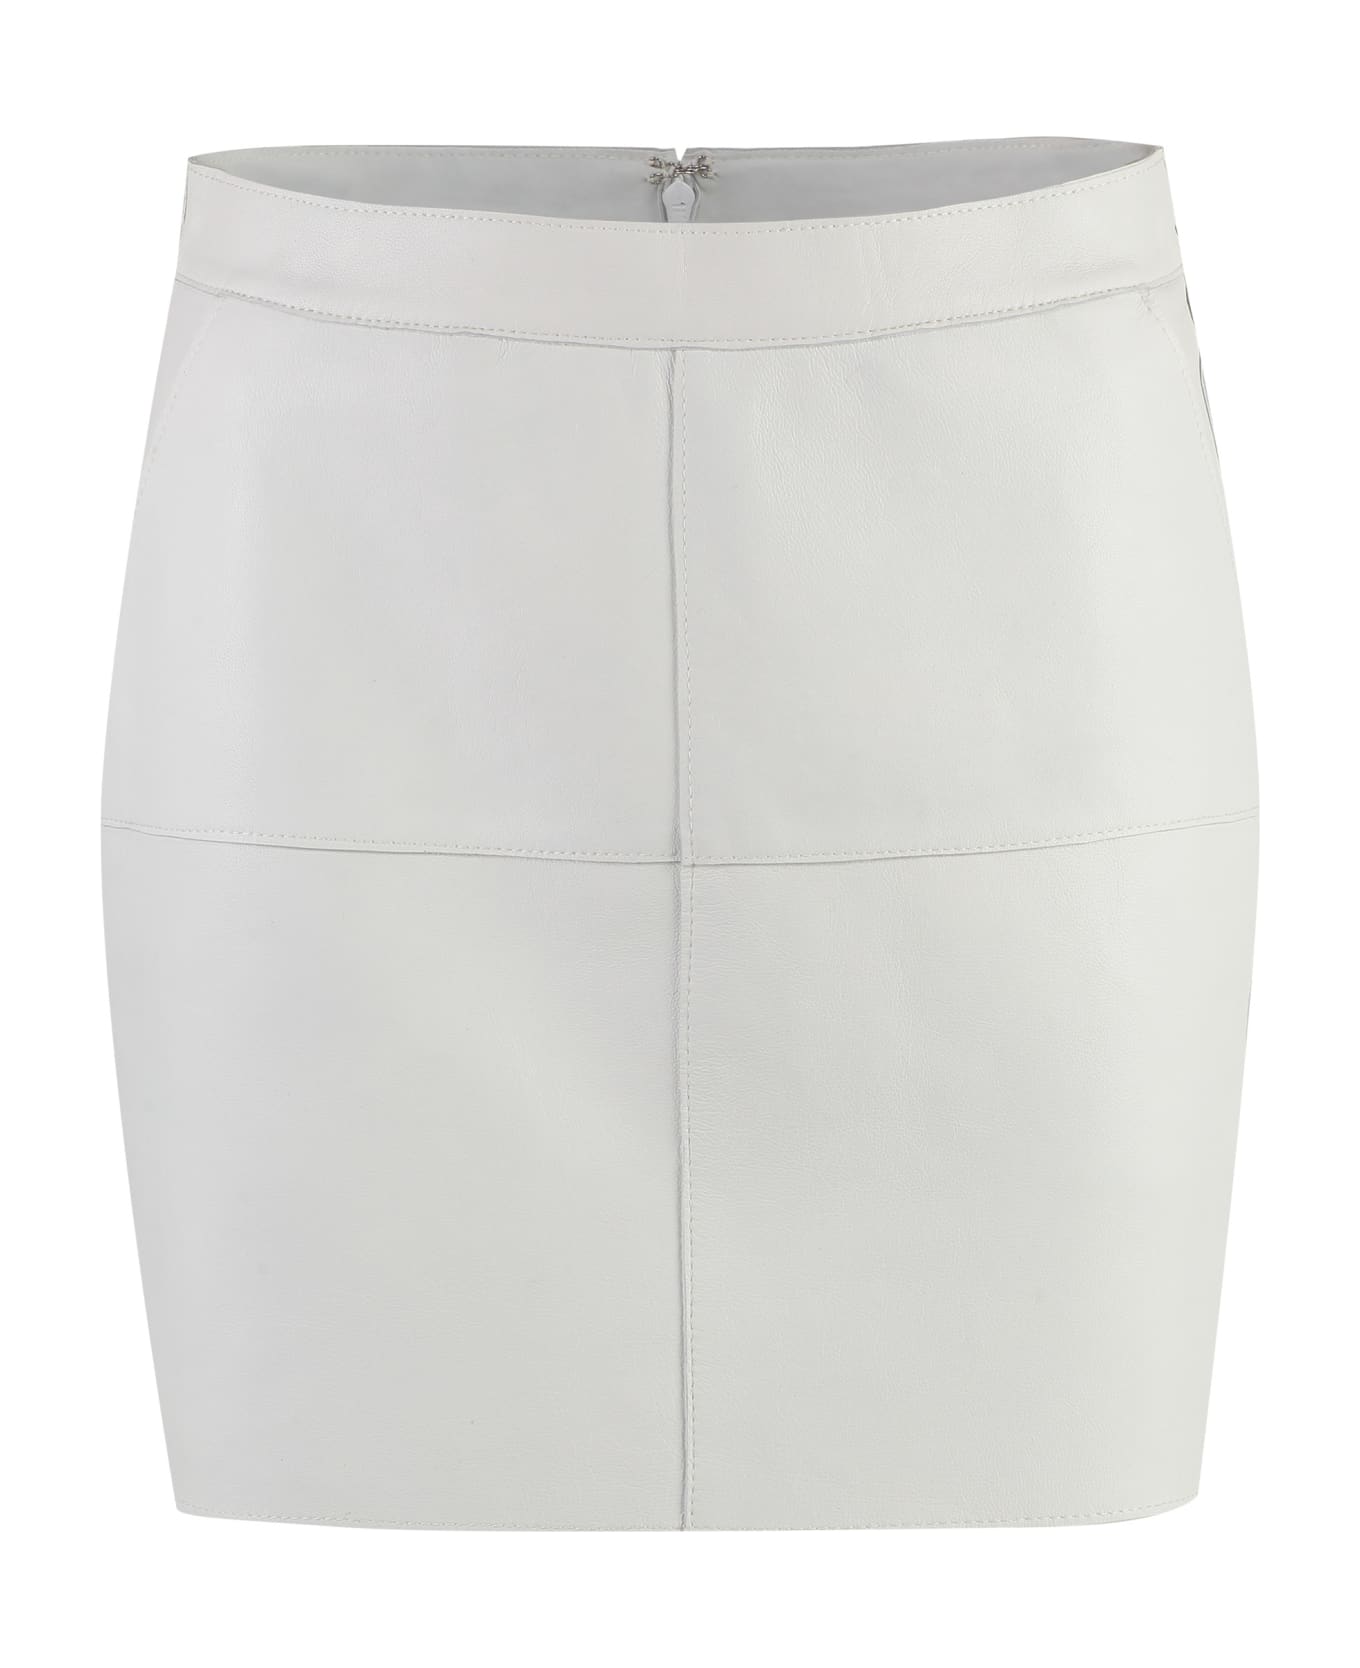 Parosh Leather Mini Skirt - White